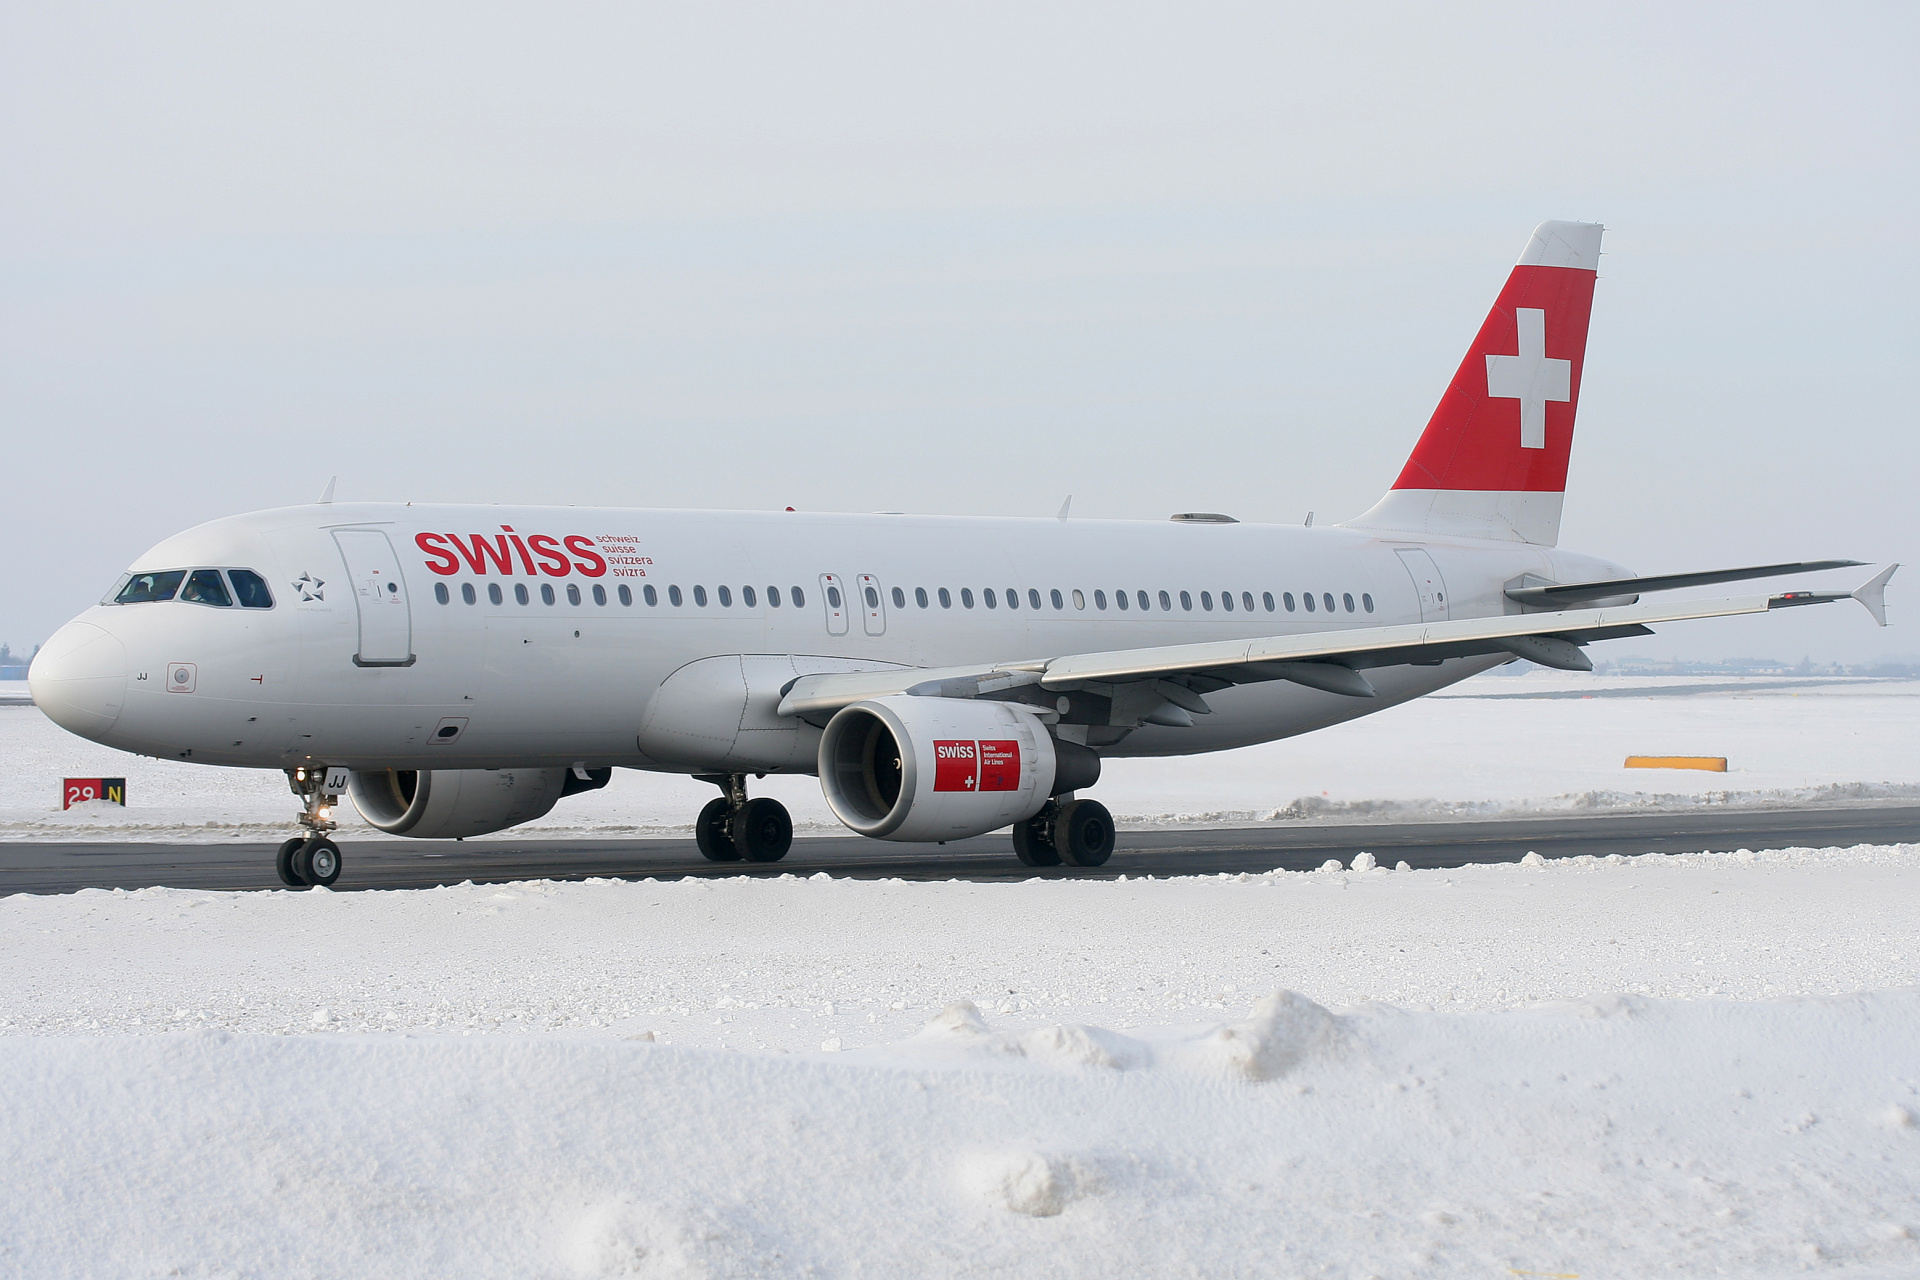 HB-IJJ (Aircraft » EPWA Spotting » Airbus A320-200 » Swiss International Air Lines)